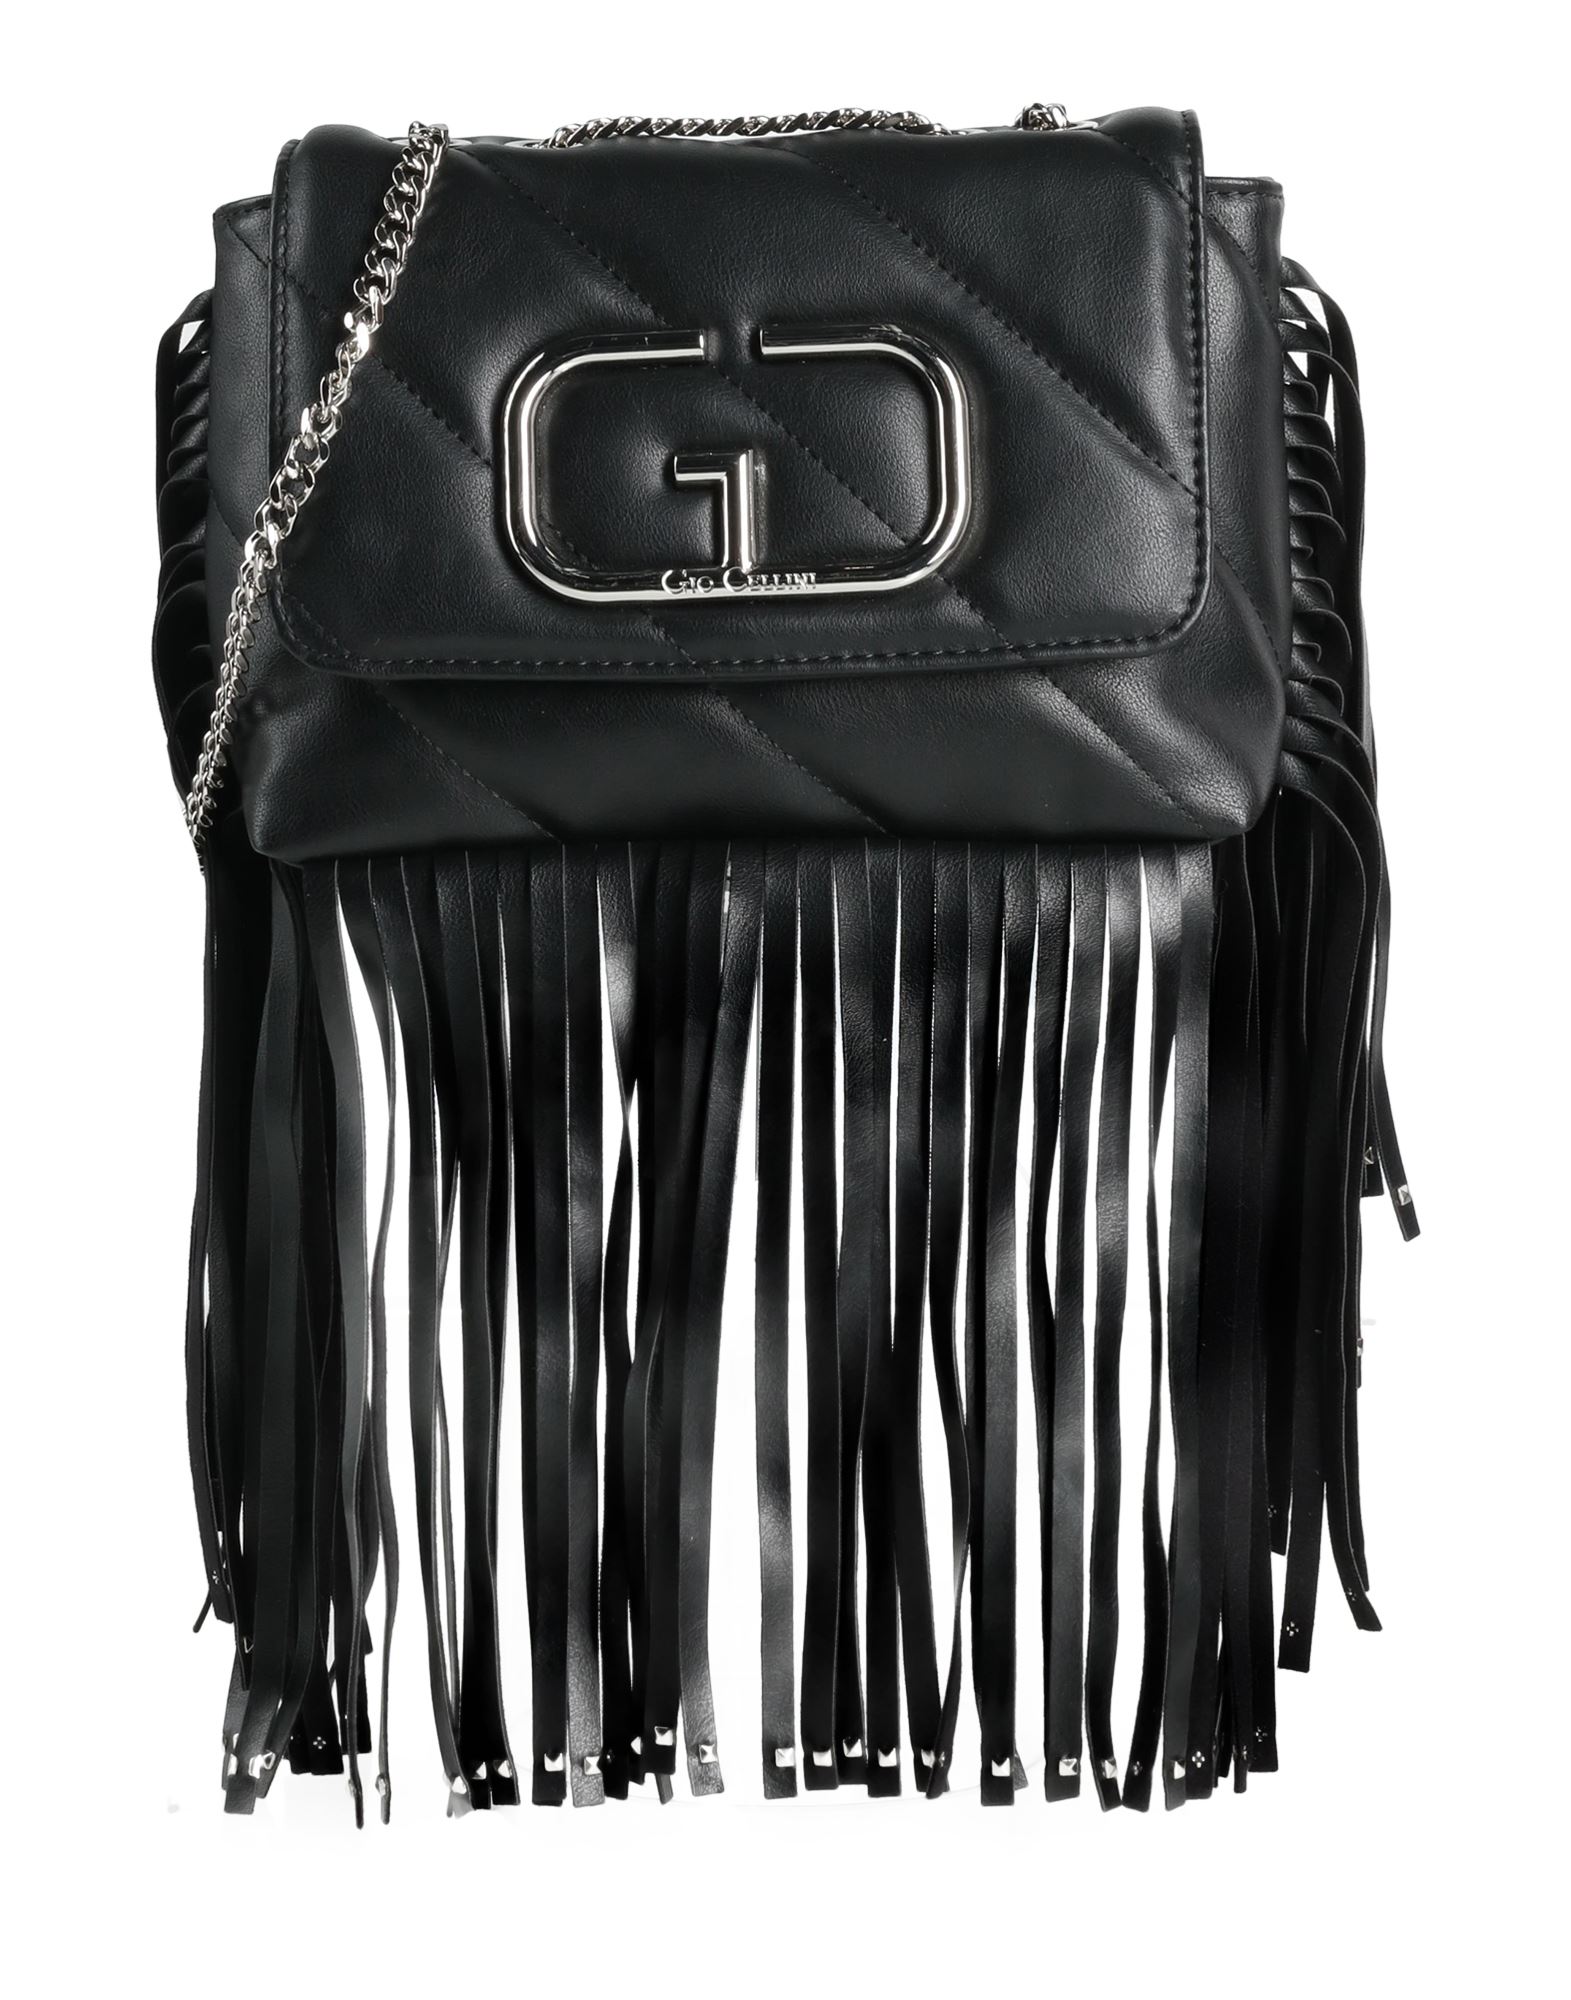 Gio Cellini Bag in Black